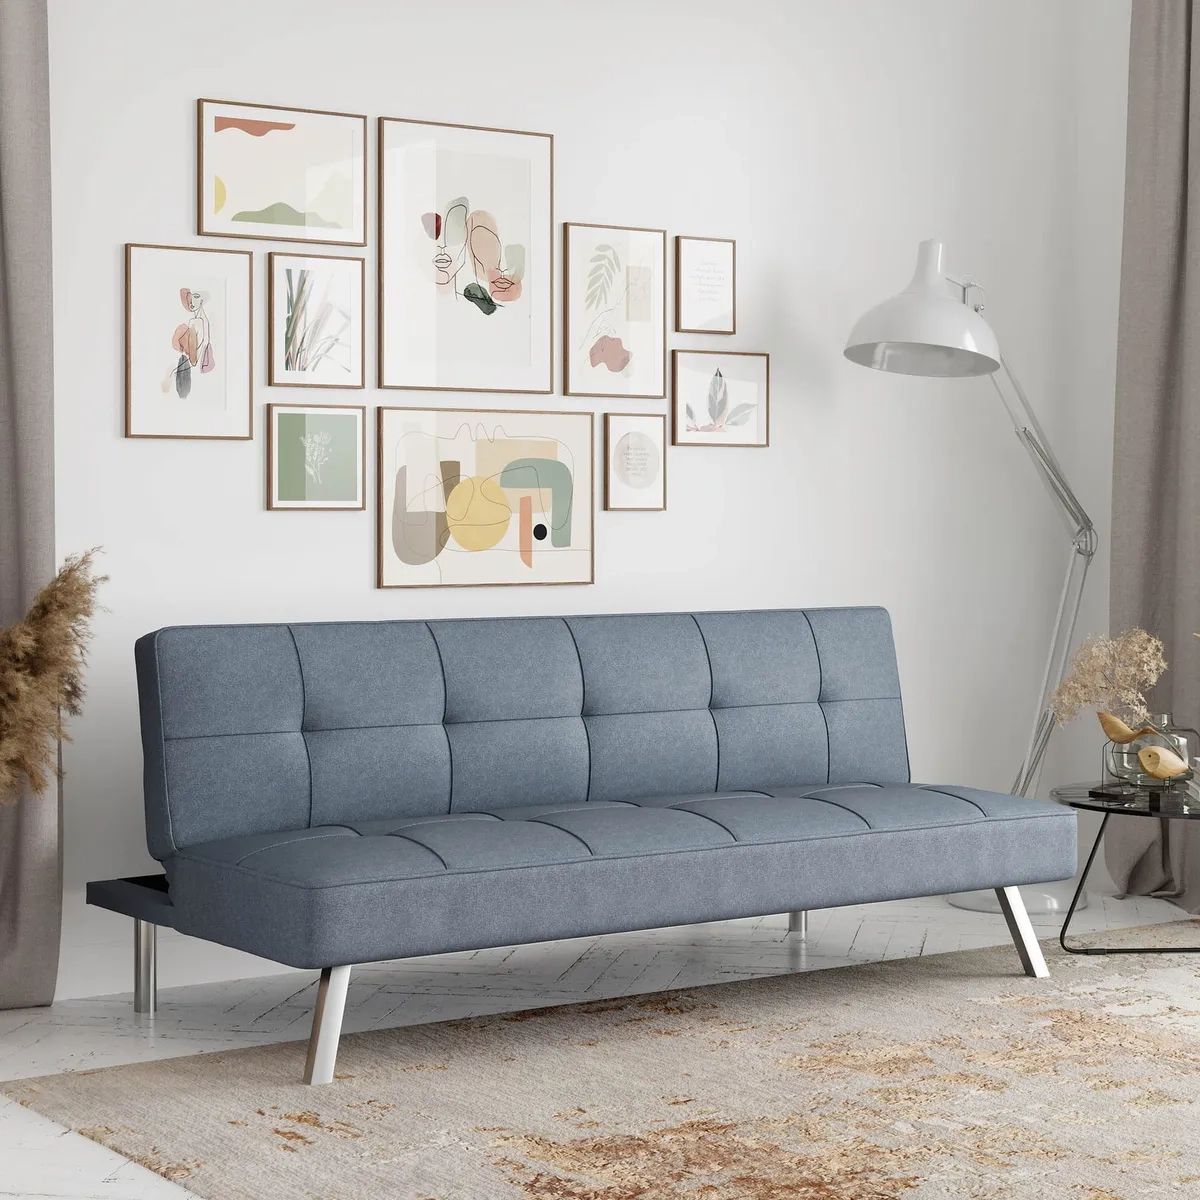 Sleeper Sofa Bed Loveseat Single Recliner Modern Futon Convertible Light  Gray | Ebay Intended For Convertible Light Gray Chair Beds (View 13 of 15)